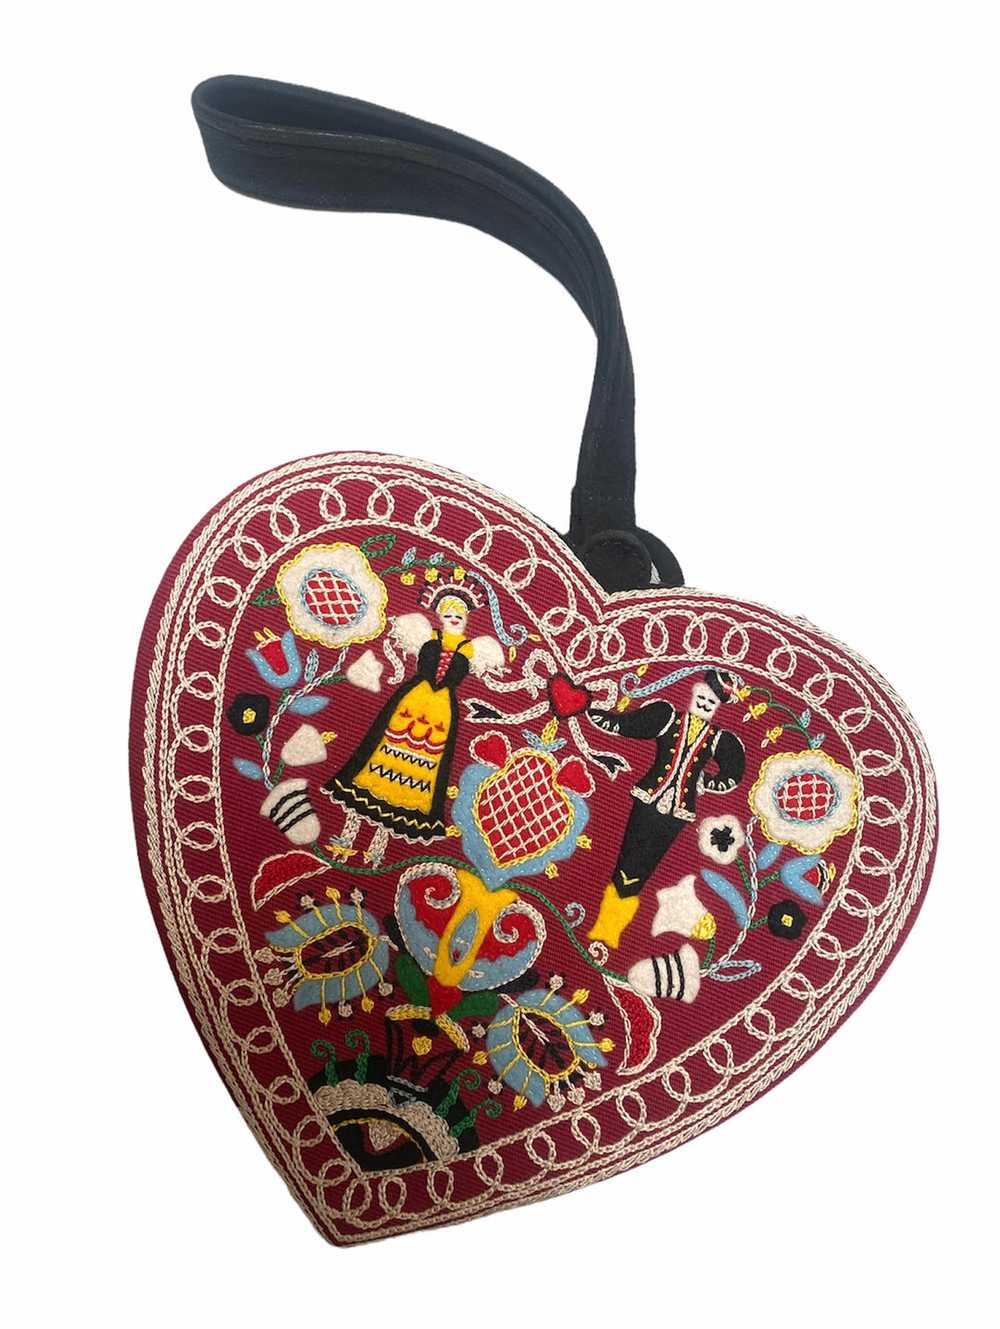 Olympia Le Tan Heart Shaped Embroidered Purse - image 1